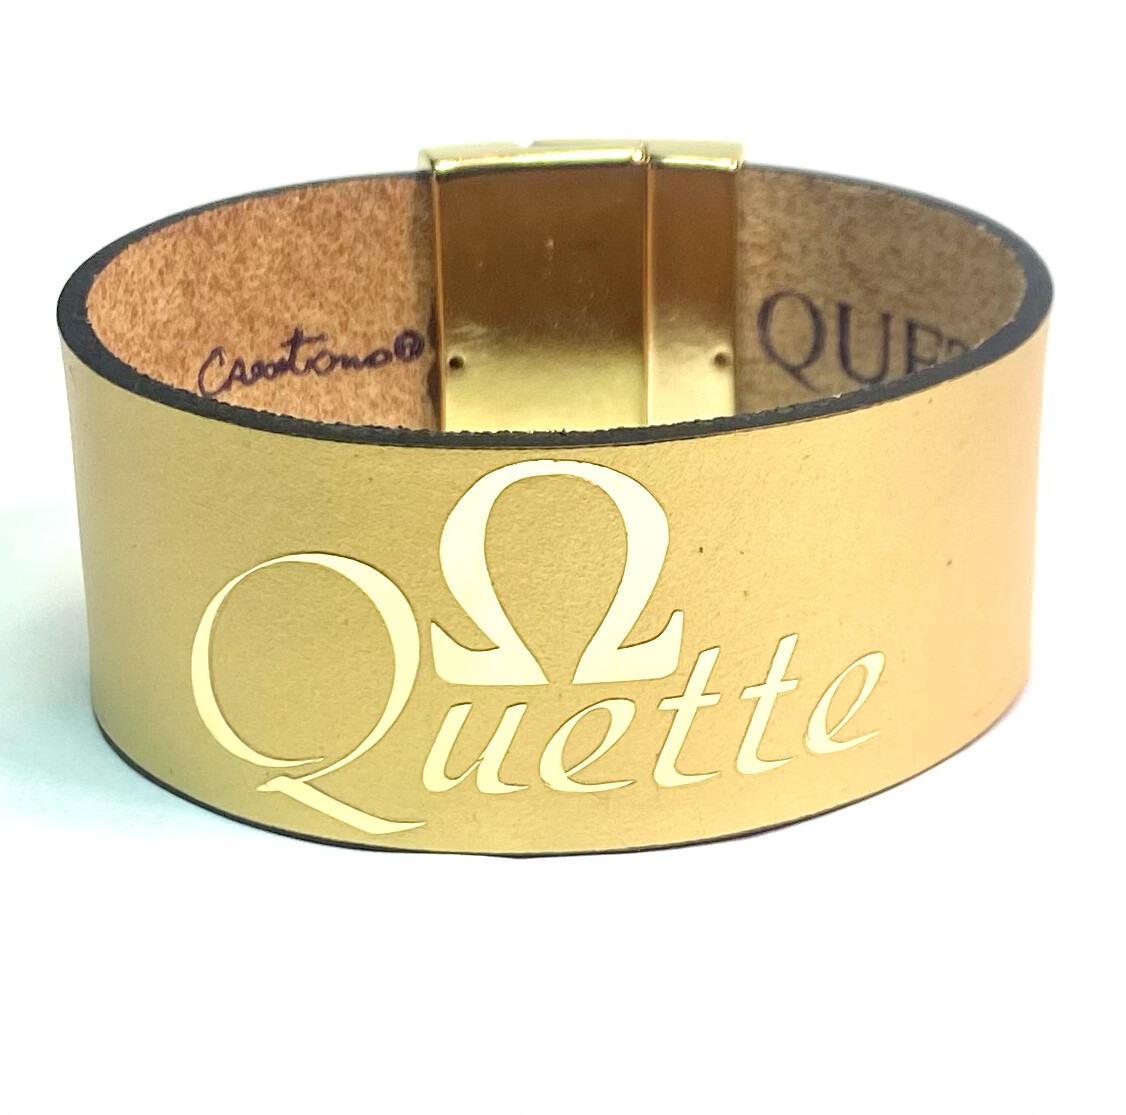 Bracelet/ Quette Gold Leather Cuff